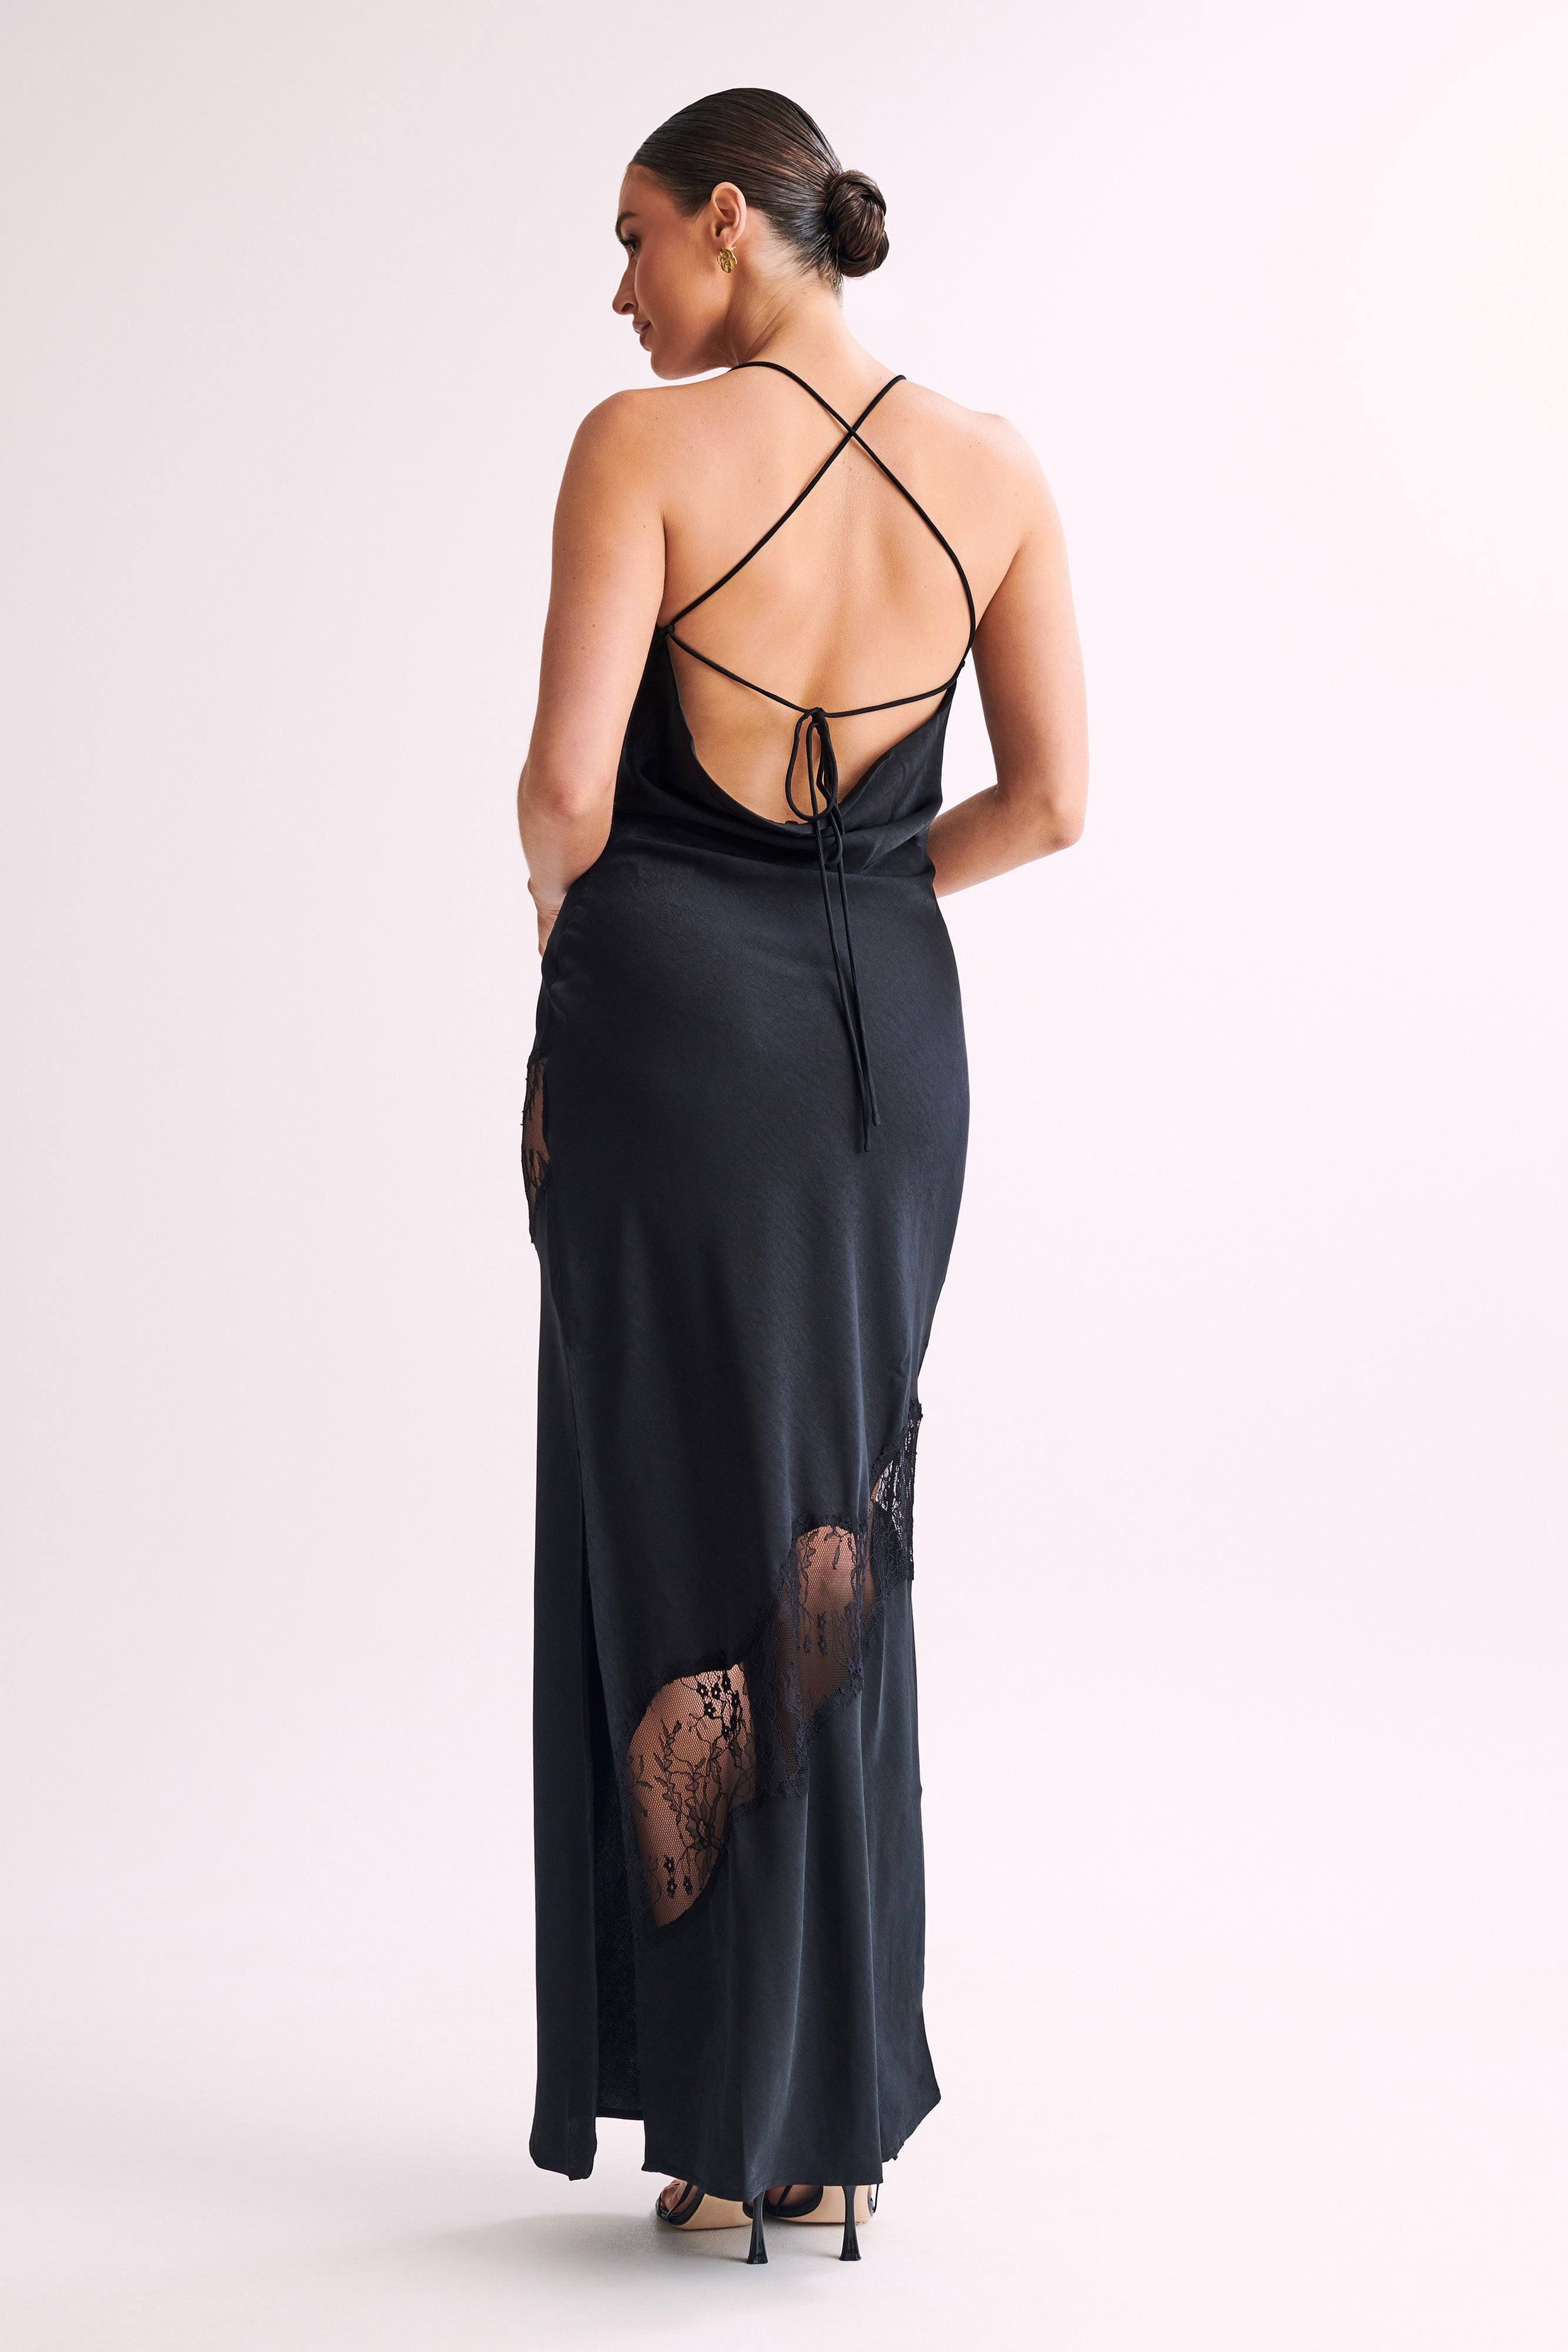 Lace Detail Satin Maxi Dress: Stylish and Romantic | Image